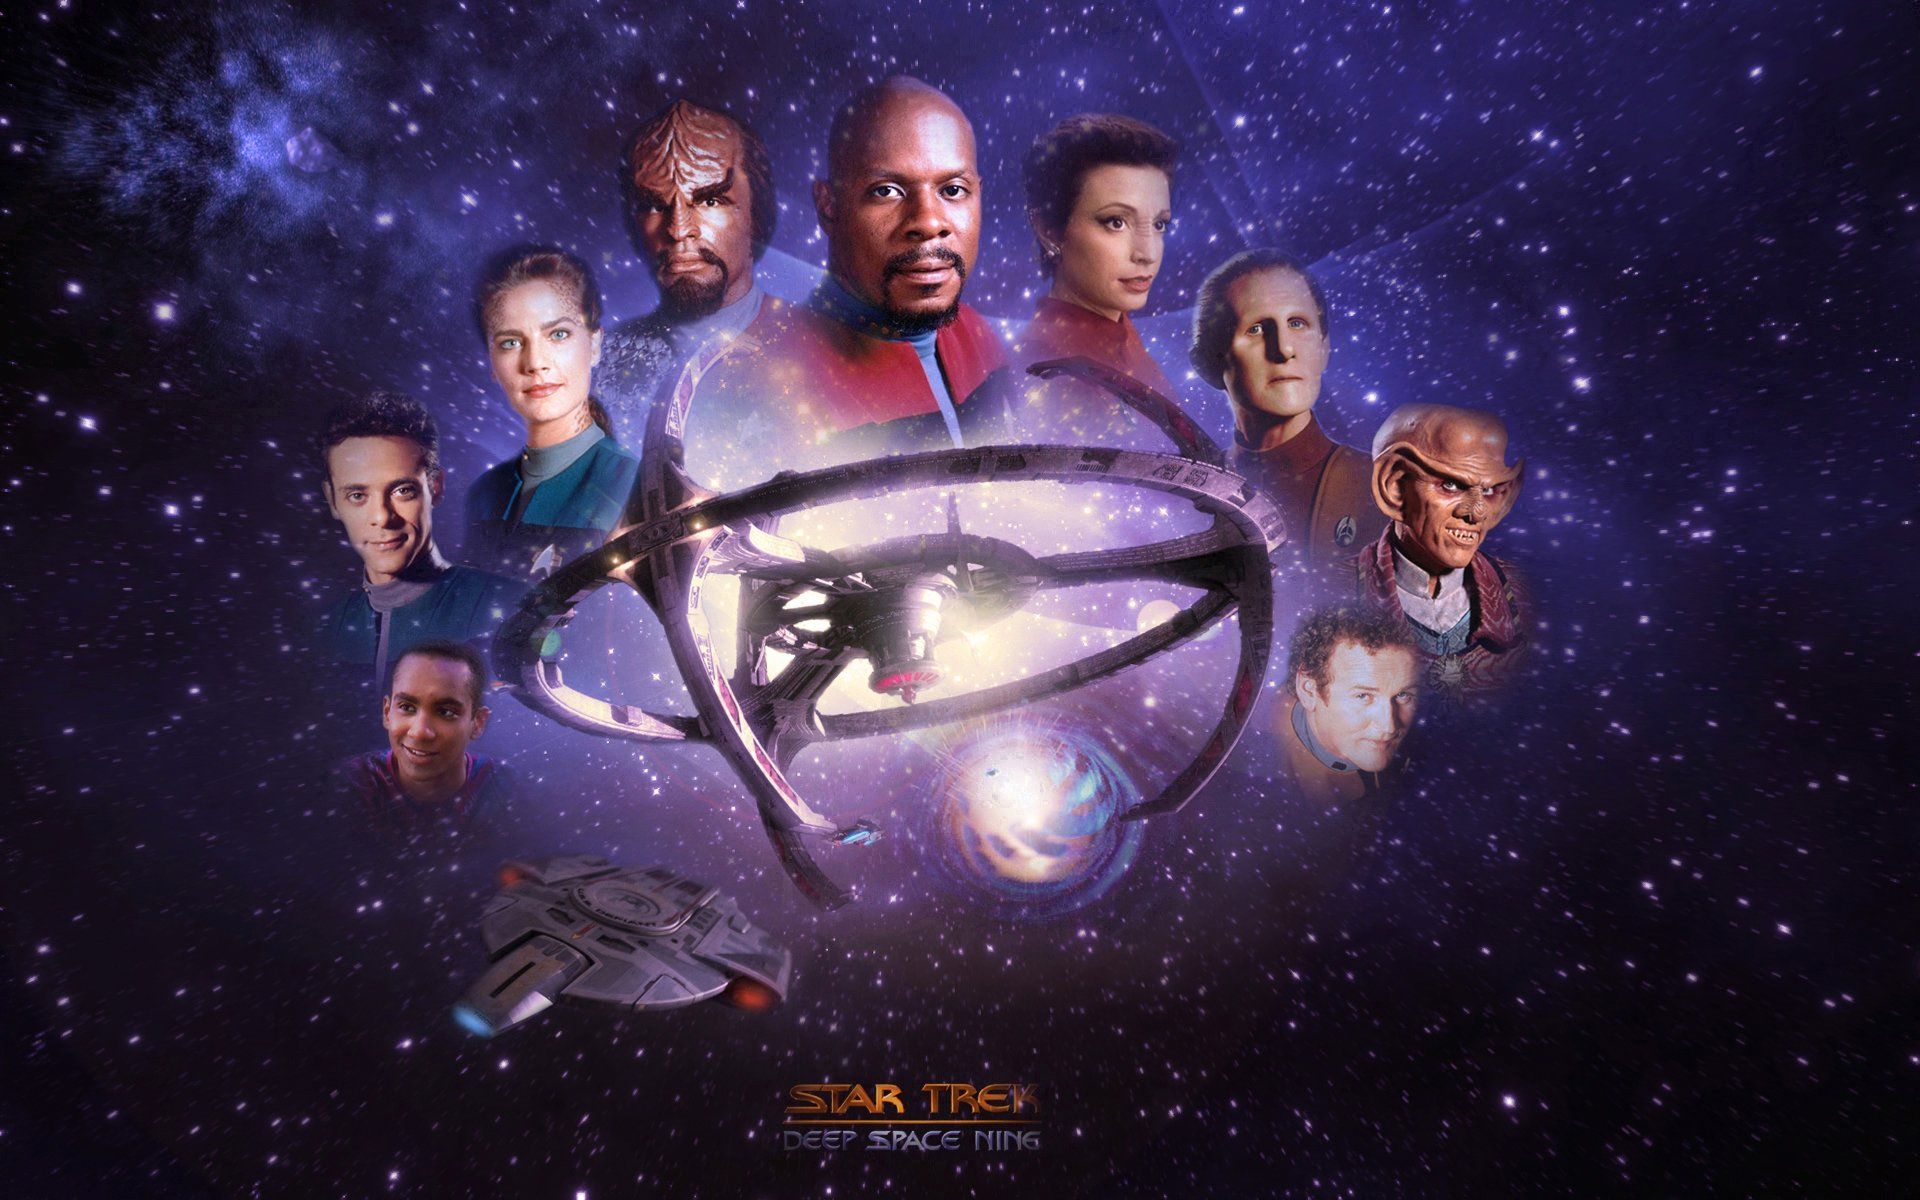 Star Trek: Deep Space Nine HD Wallpaper and Background Image